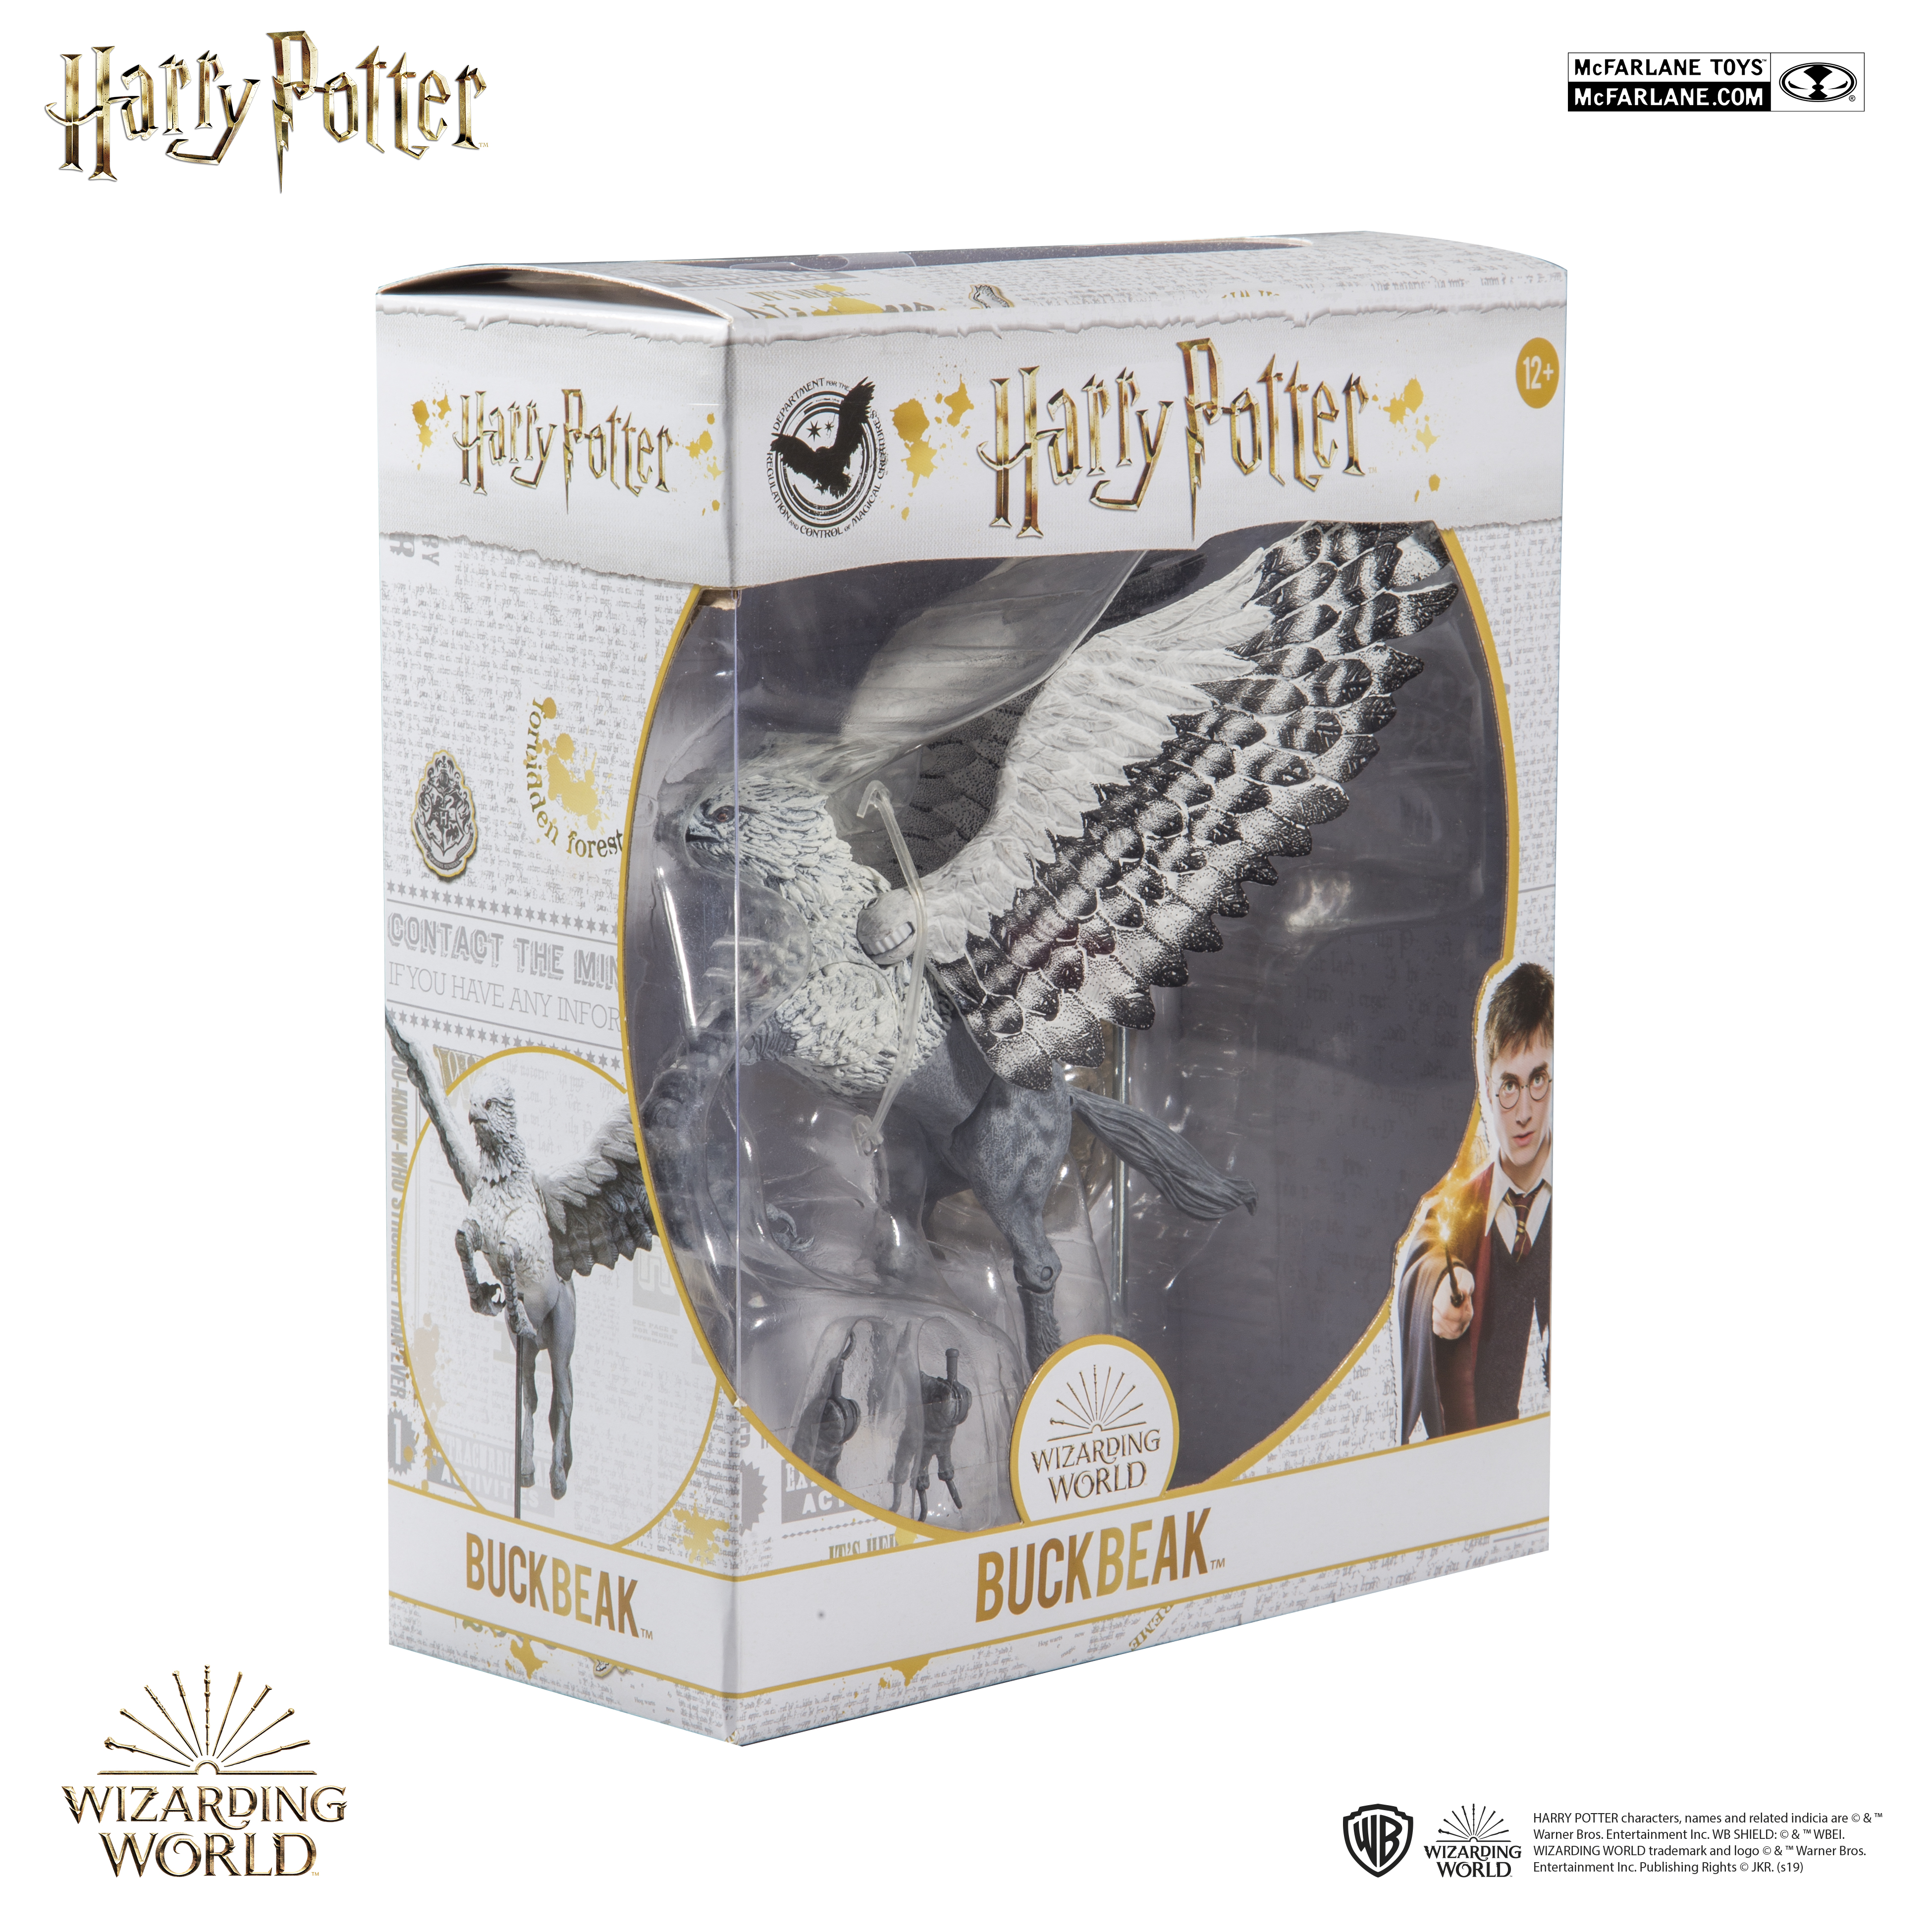 McFarlane Toys Harry Potter Buckbeak Action Figure Wizarding Worlds for sale online 